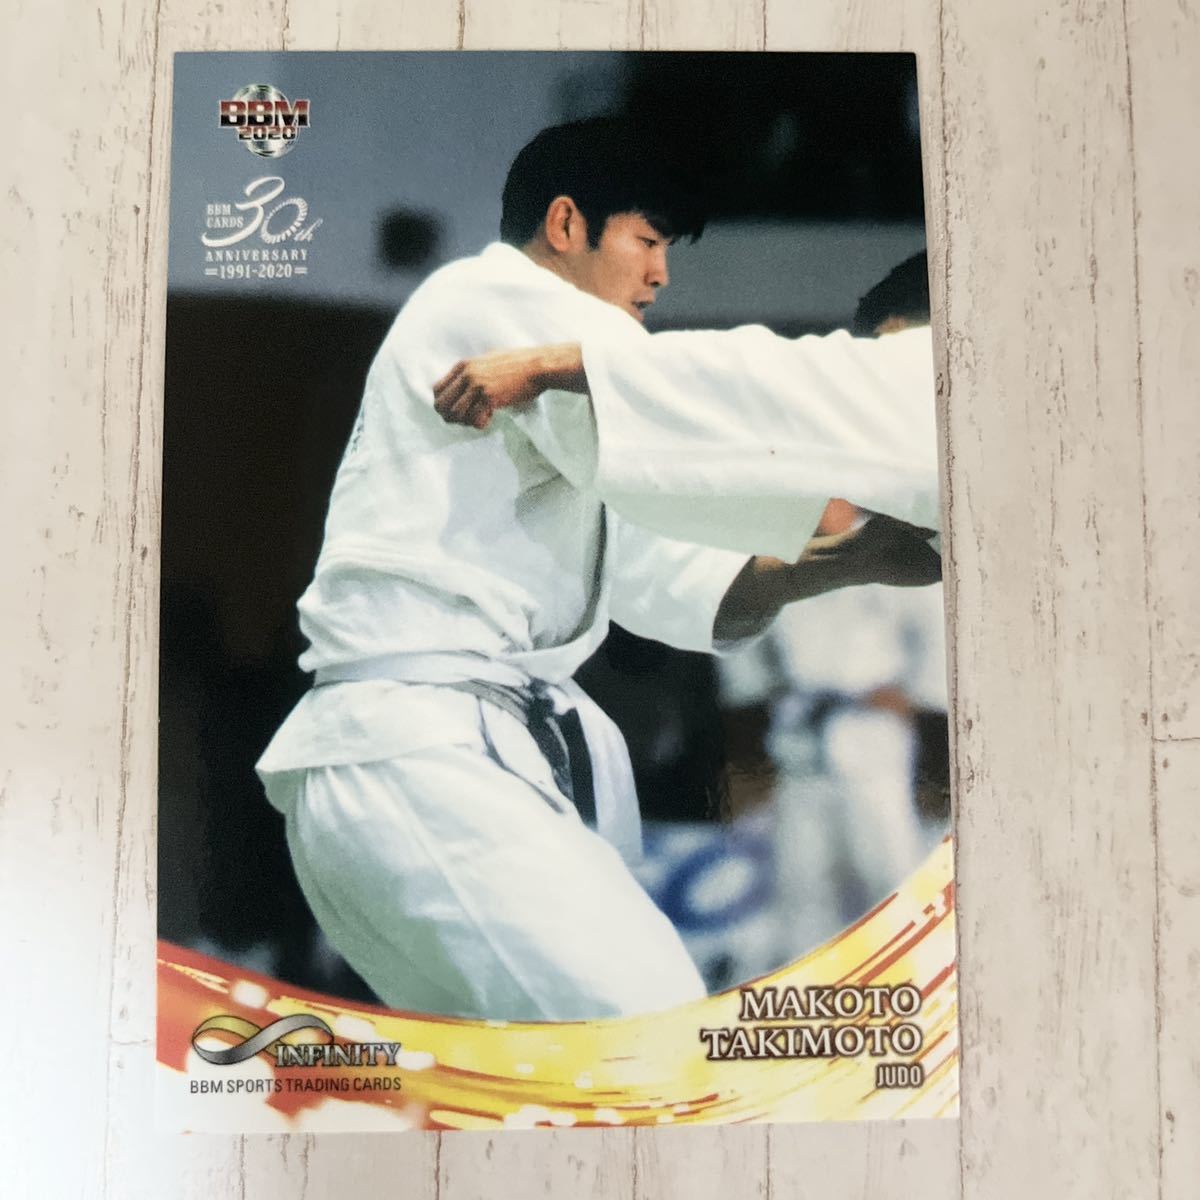 BBM 2020 スポーツトレーディングカード INFINITY インフィニティ 男子柔道 瀧本誠 オリンピックメダリストの画像1